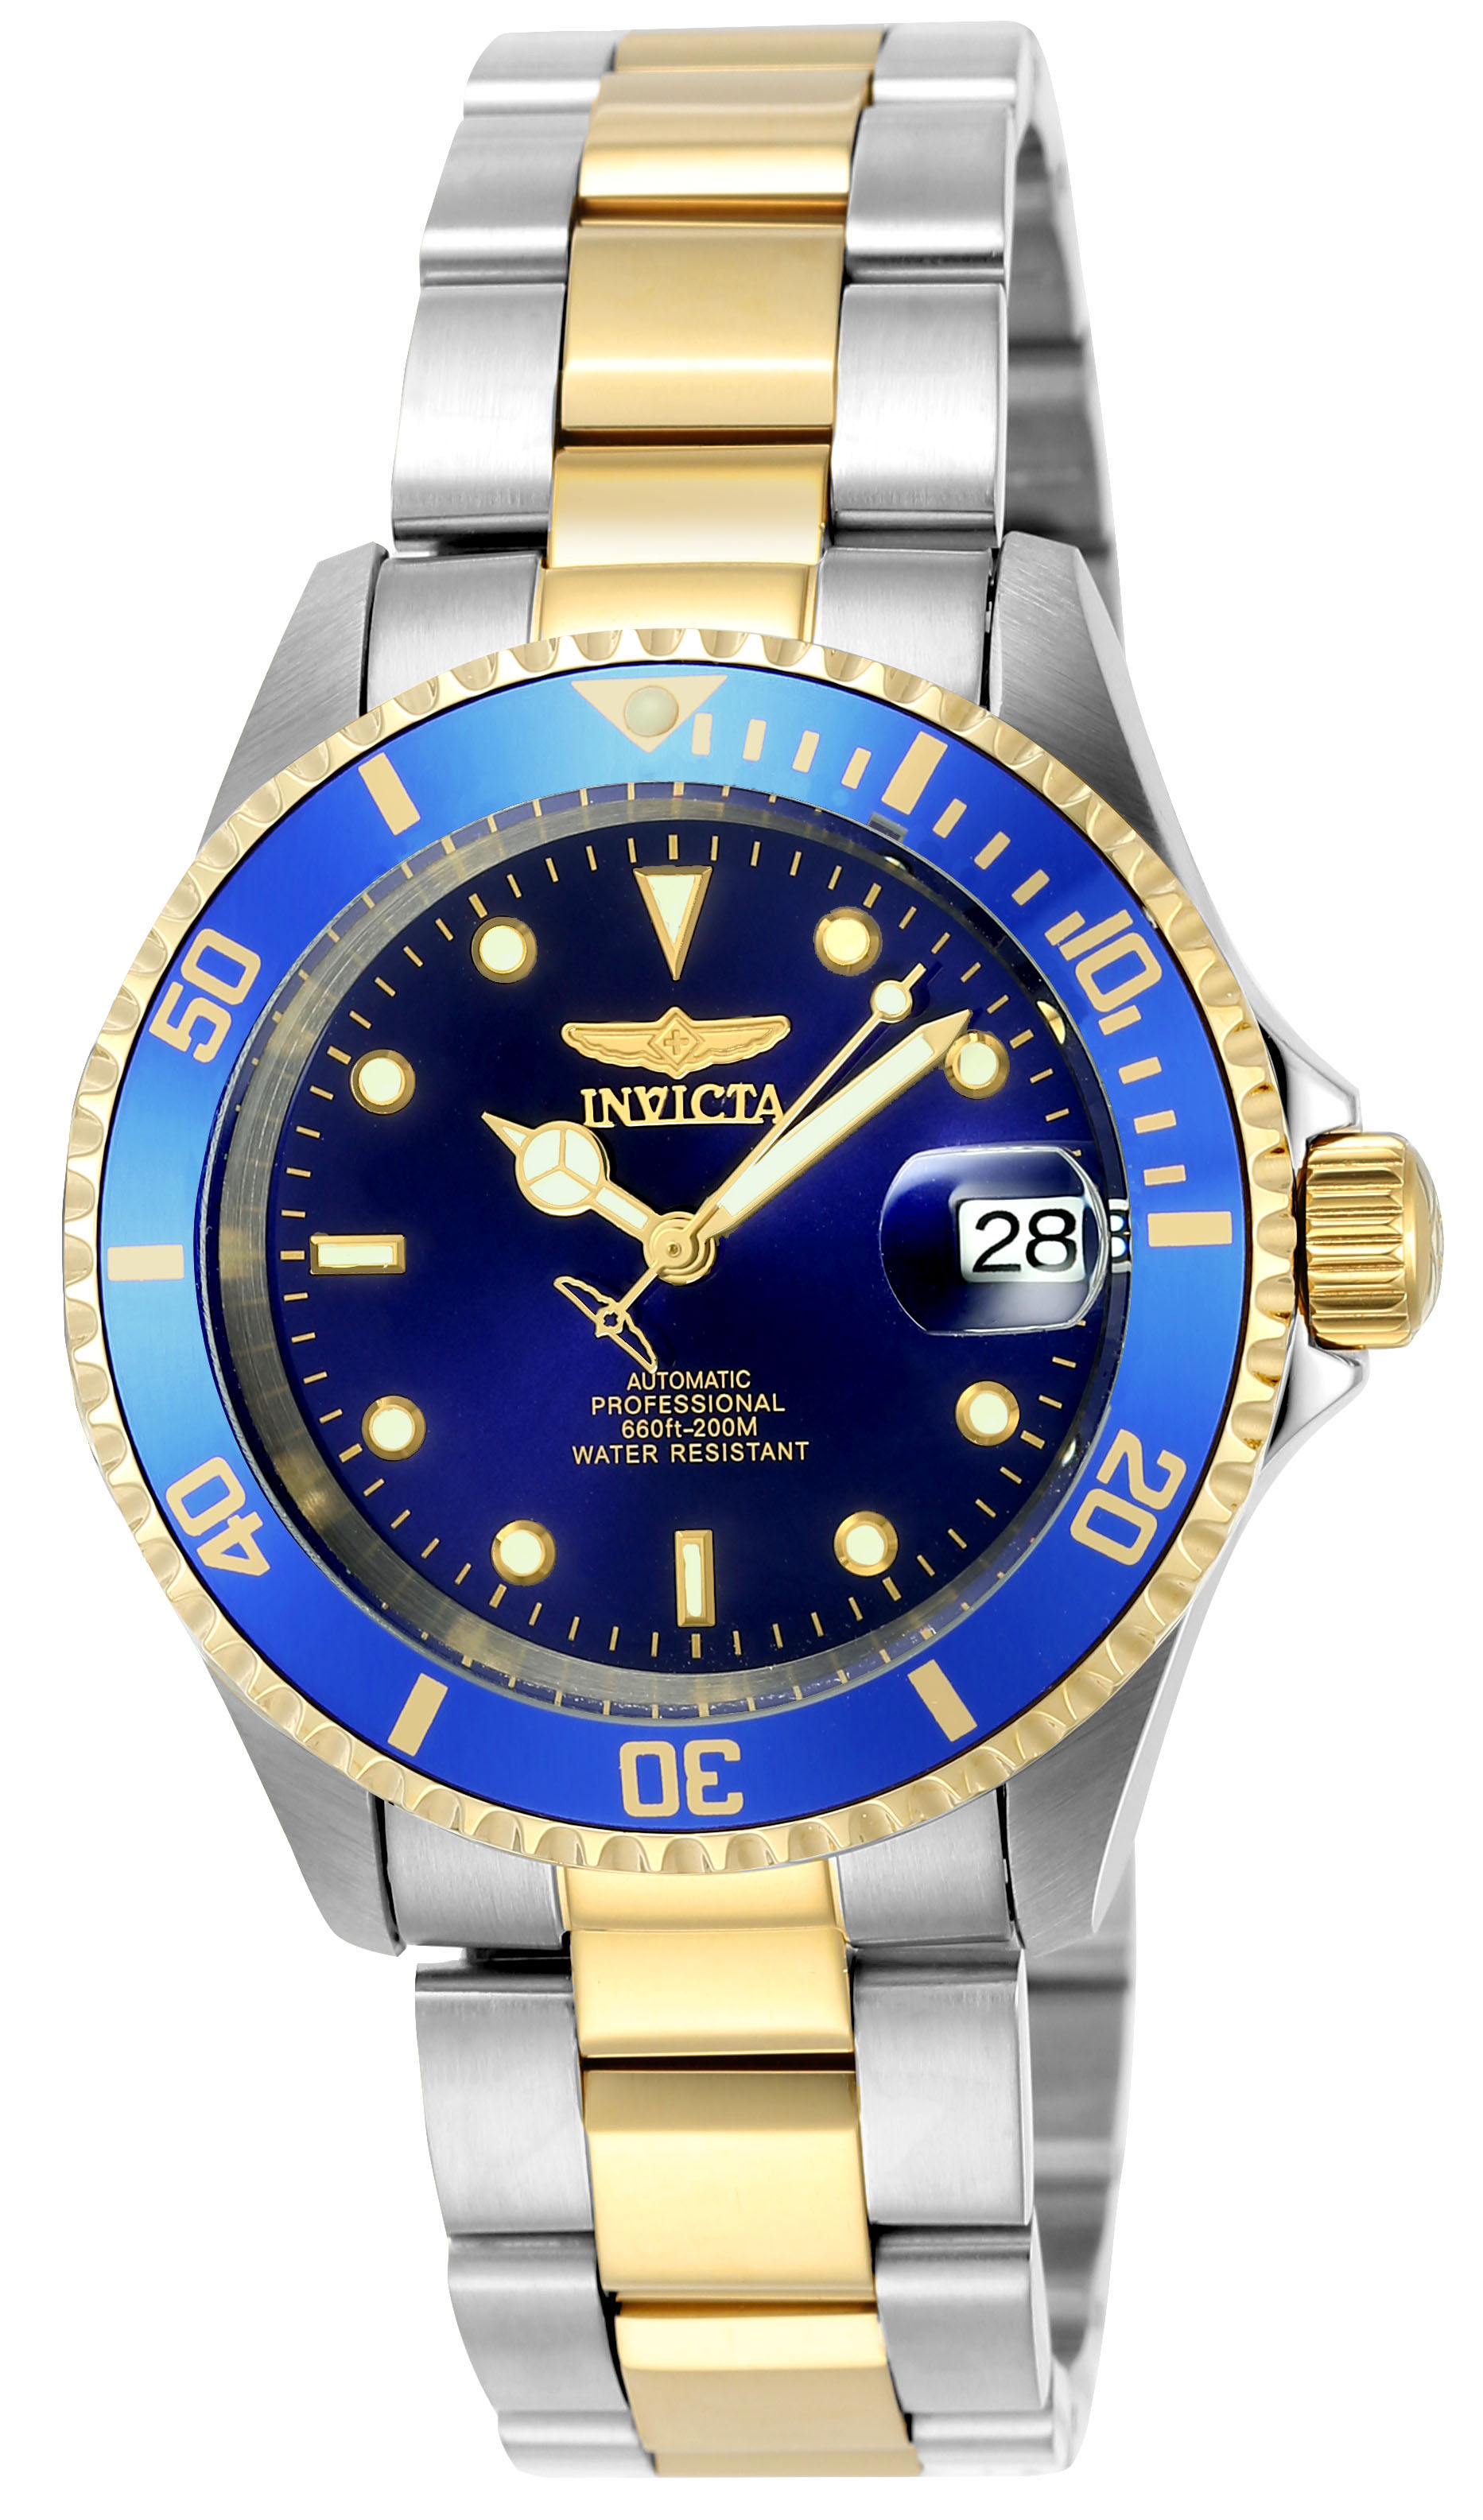 Putte eksekverbar telegram Invicta Pro Diver Men's Watches (Mod: 8928OB) | Invicta Watches